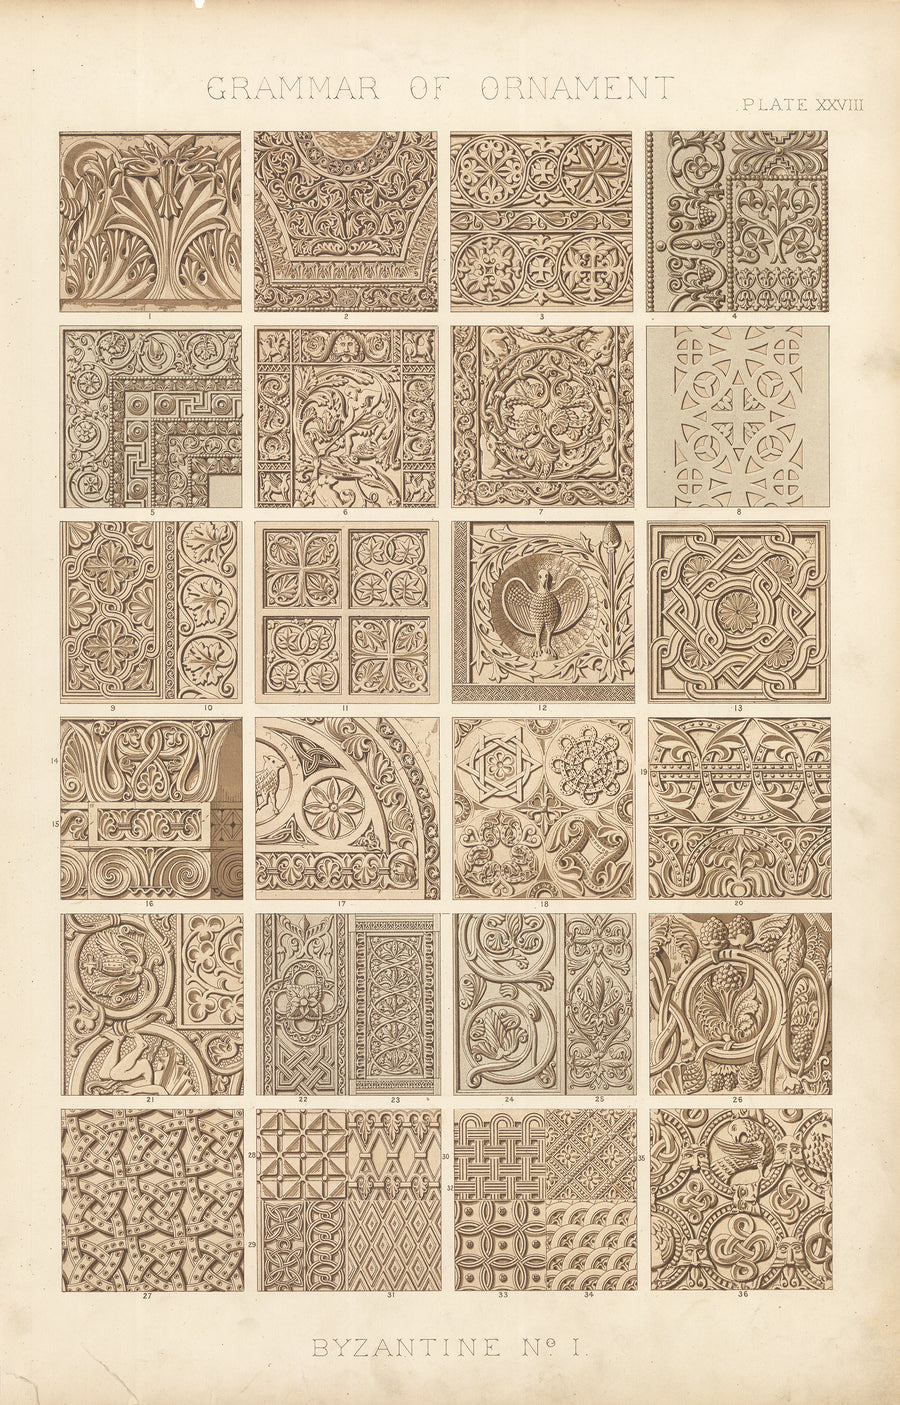 Antique Lithograph Print: Grammar of Ornament by Owen Jones, 1st edition 1856 - Byzantine No.1, Plate XXVIII